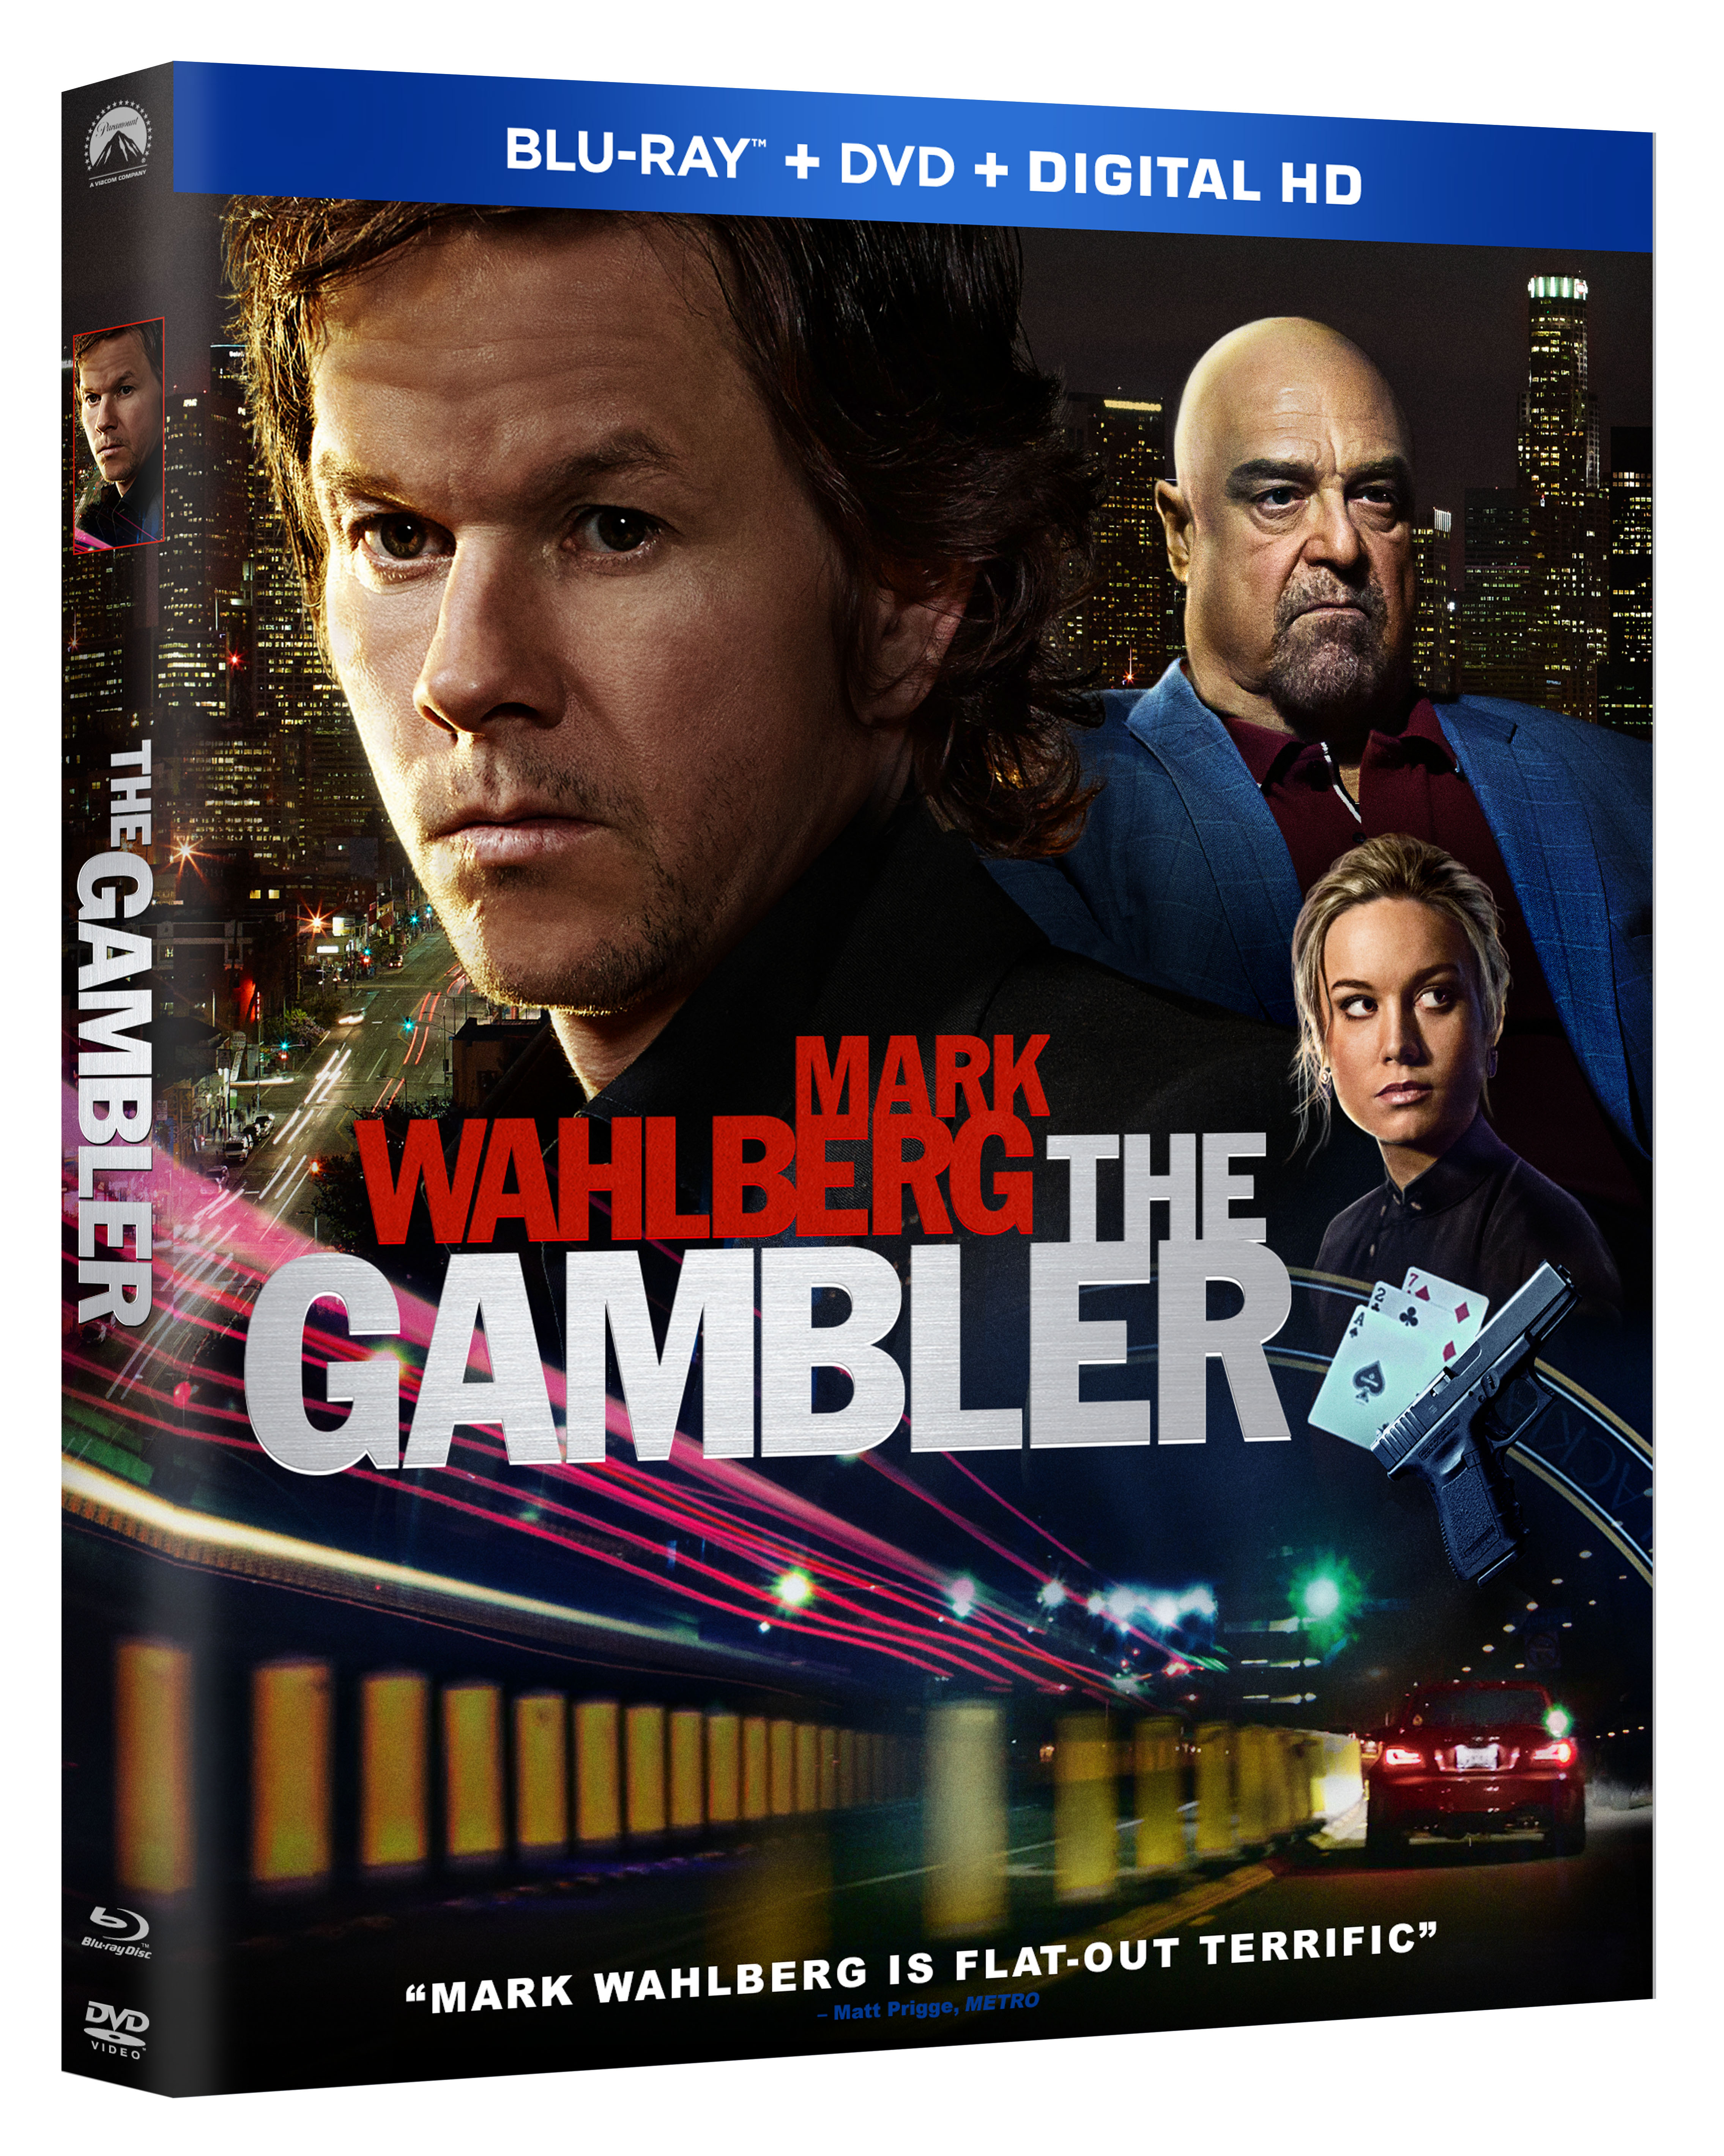 Gambler-giveaway-0408-2